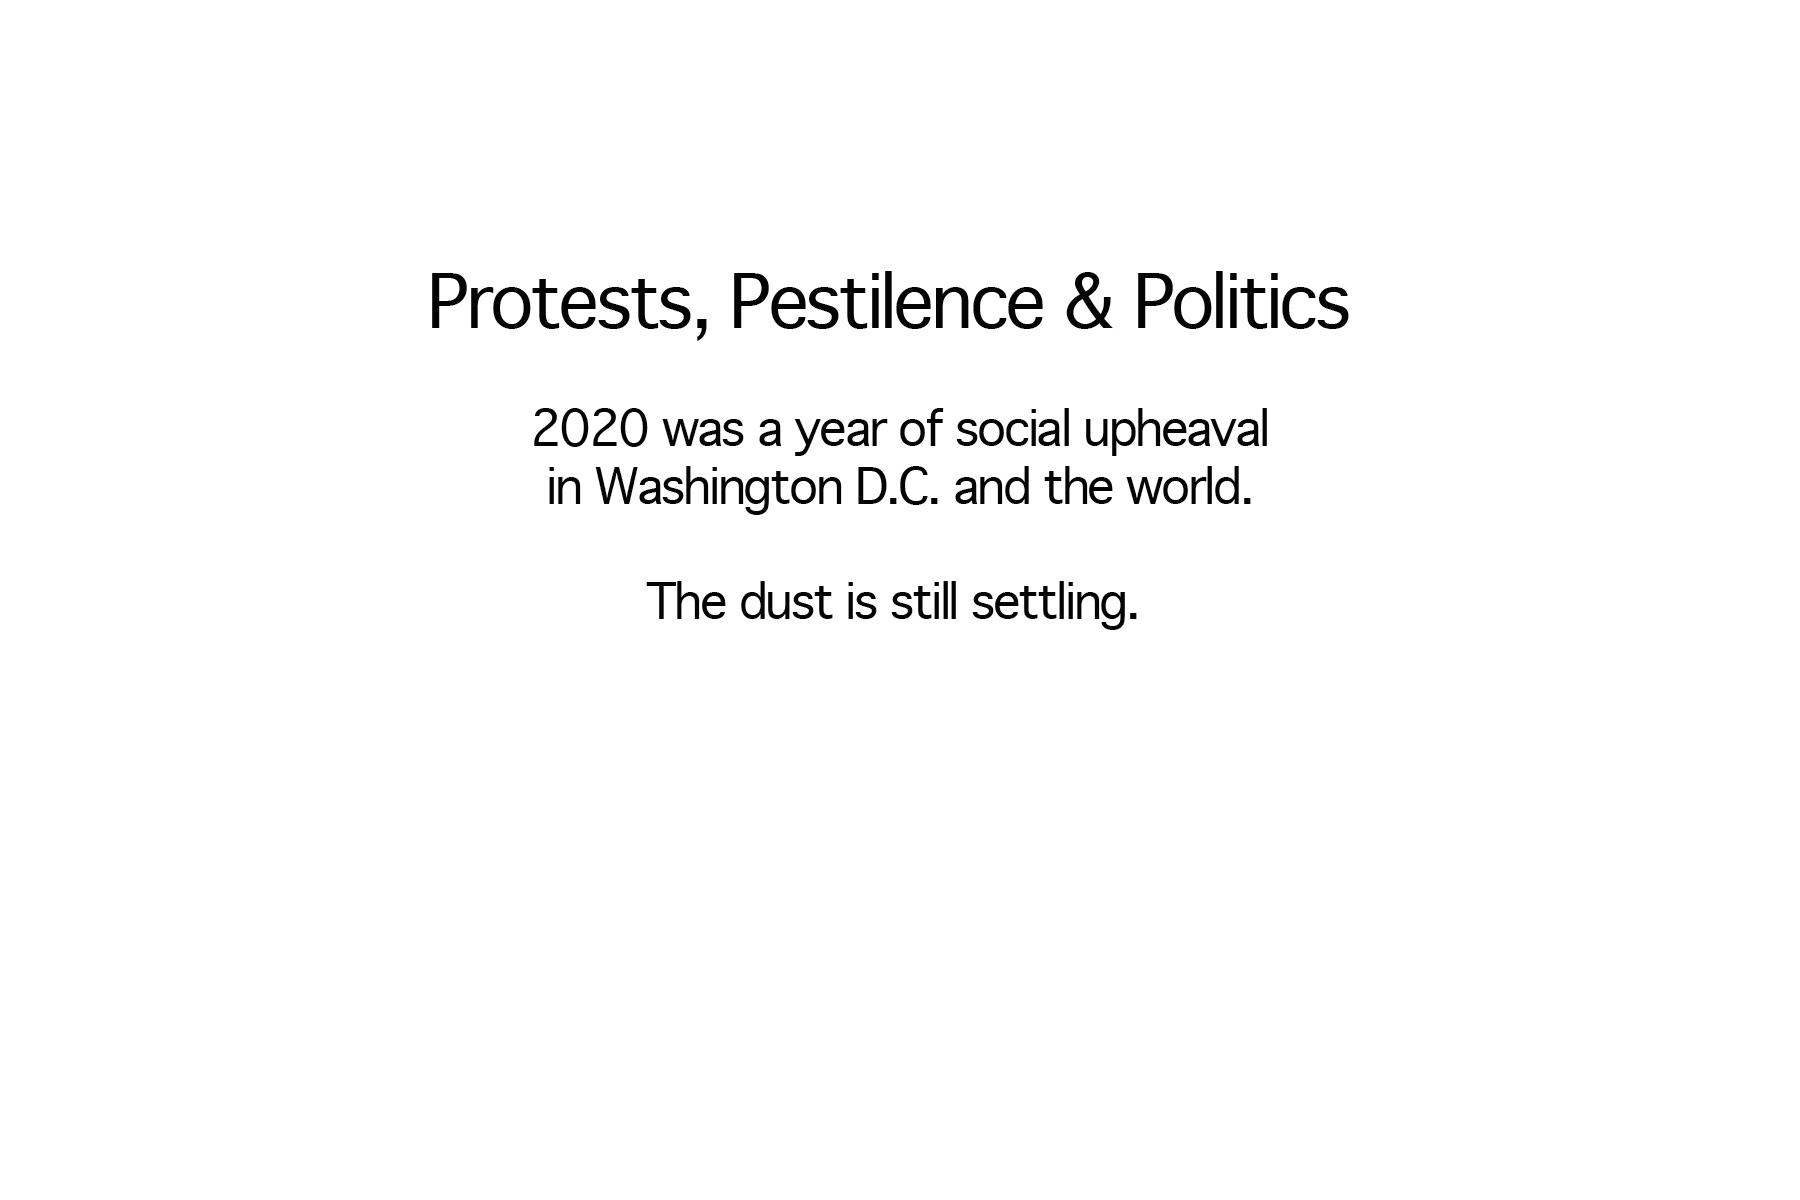 Protests, Pestilence & Politics - 